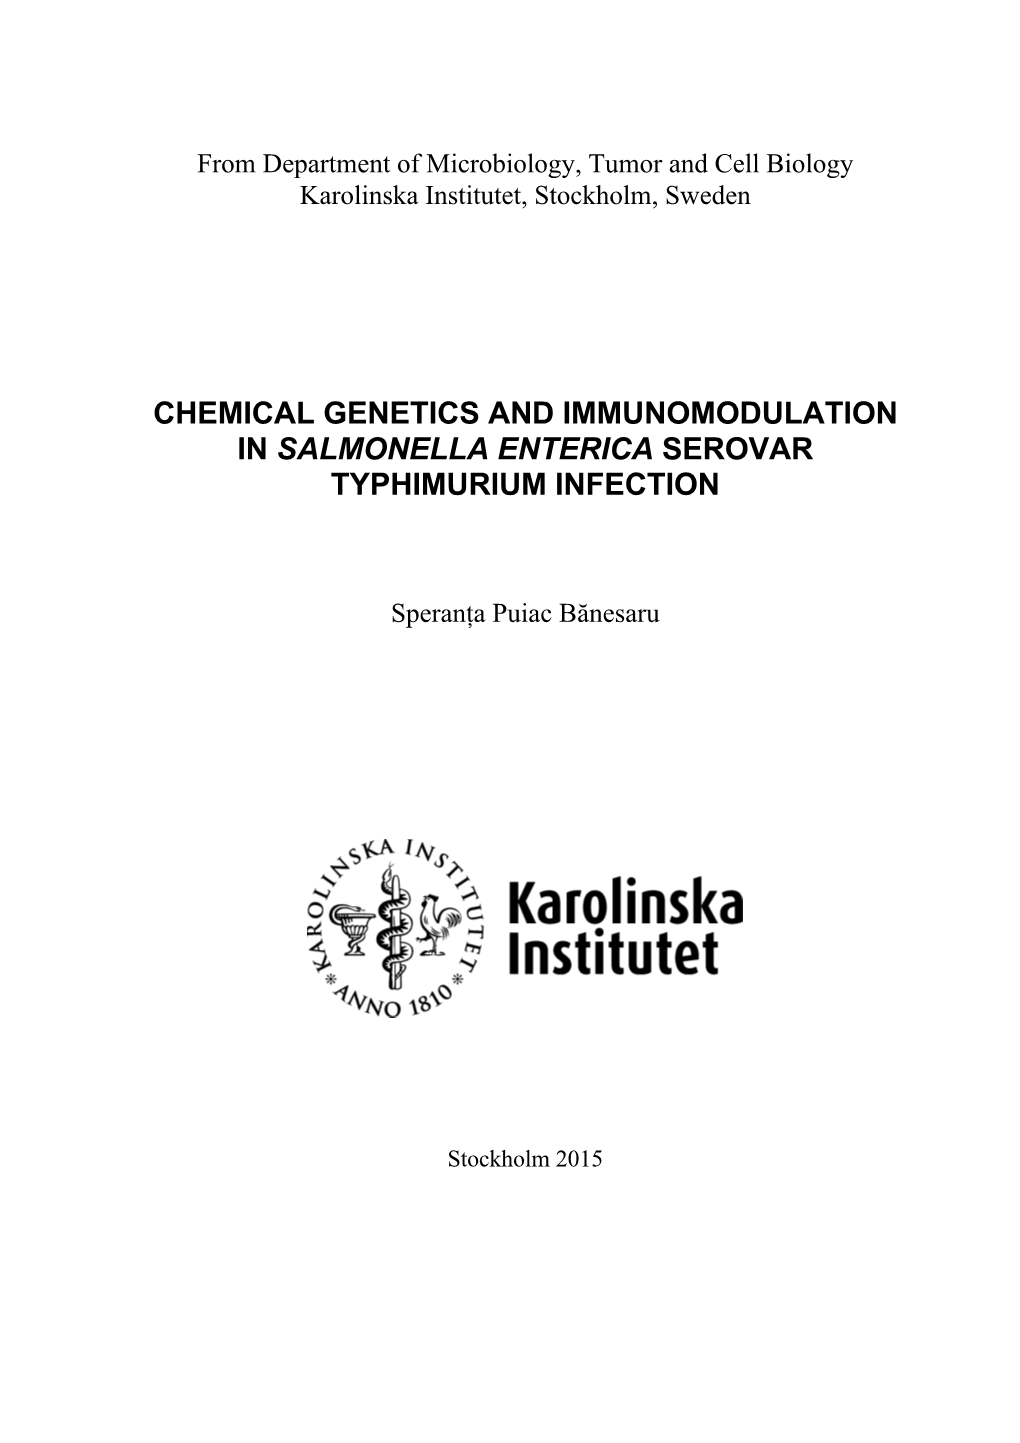 Chemical Genetics and Immunomodulation in Salmonella Enterica Serovar Typhimurium Infection